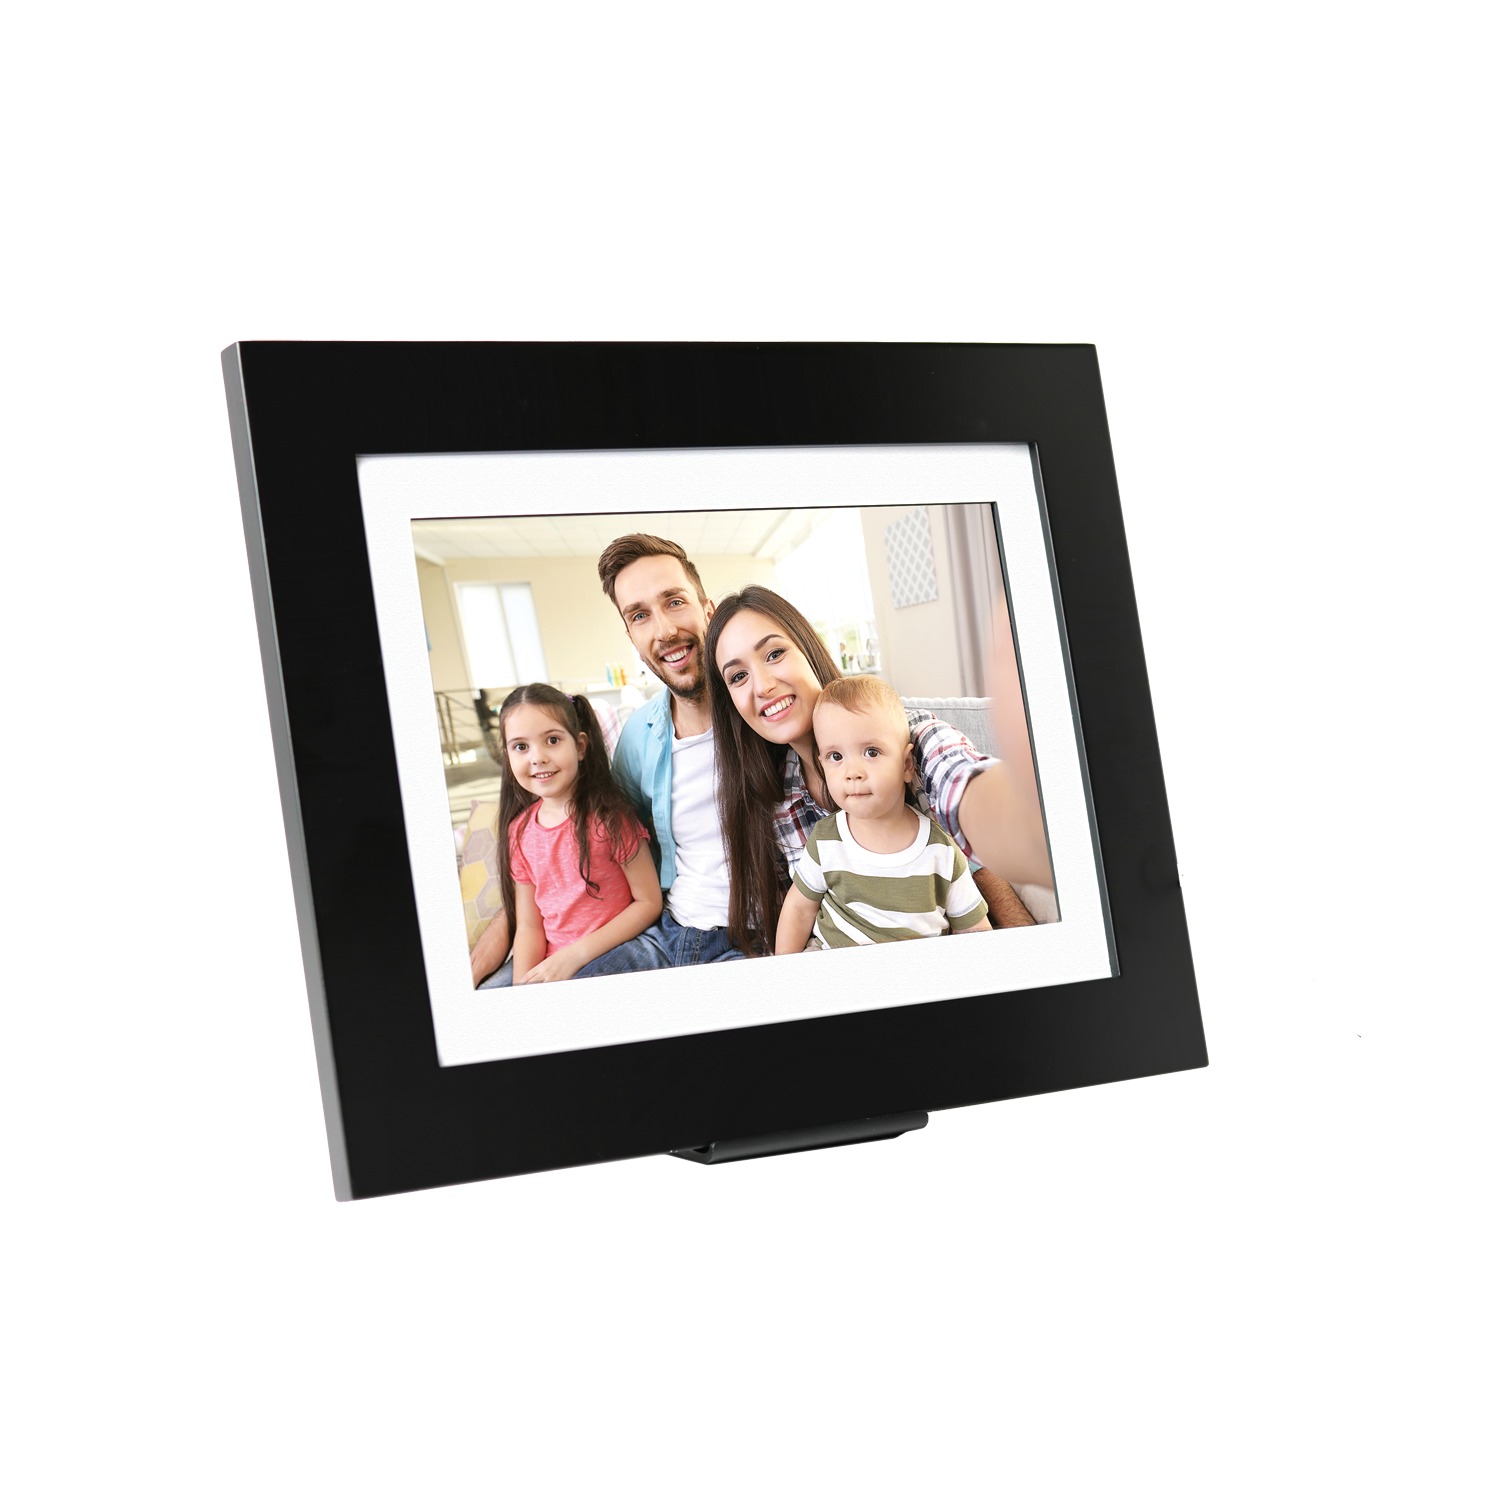 Brookstone PhotoShare 8" Smart Digital Picure Frame in Black - image 2 of 6